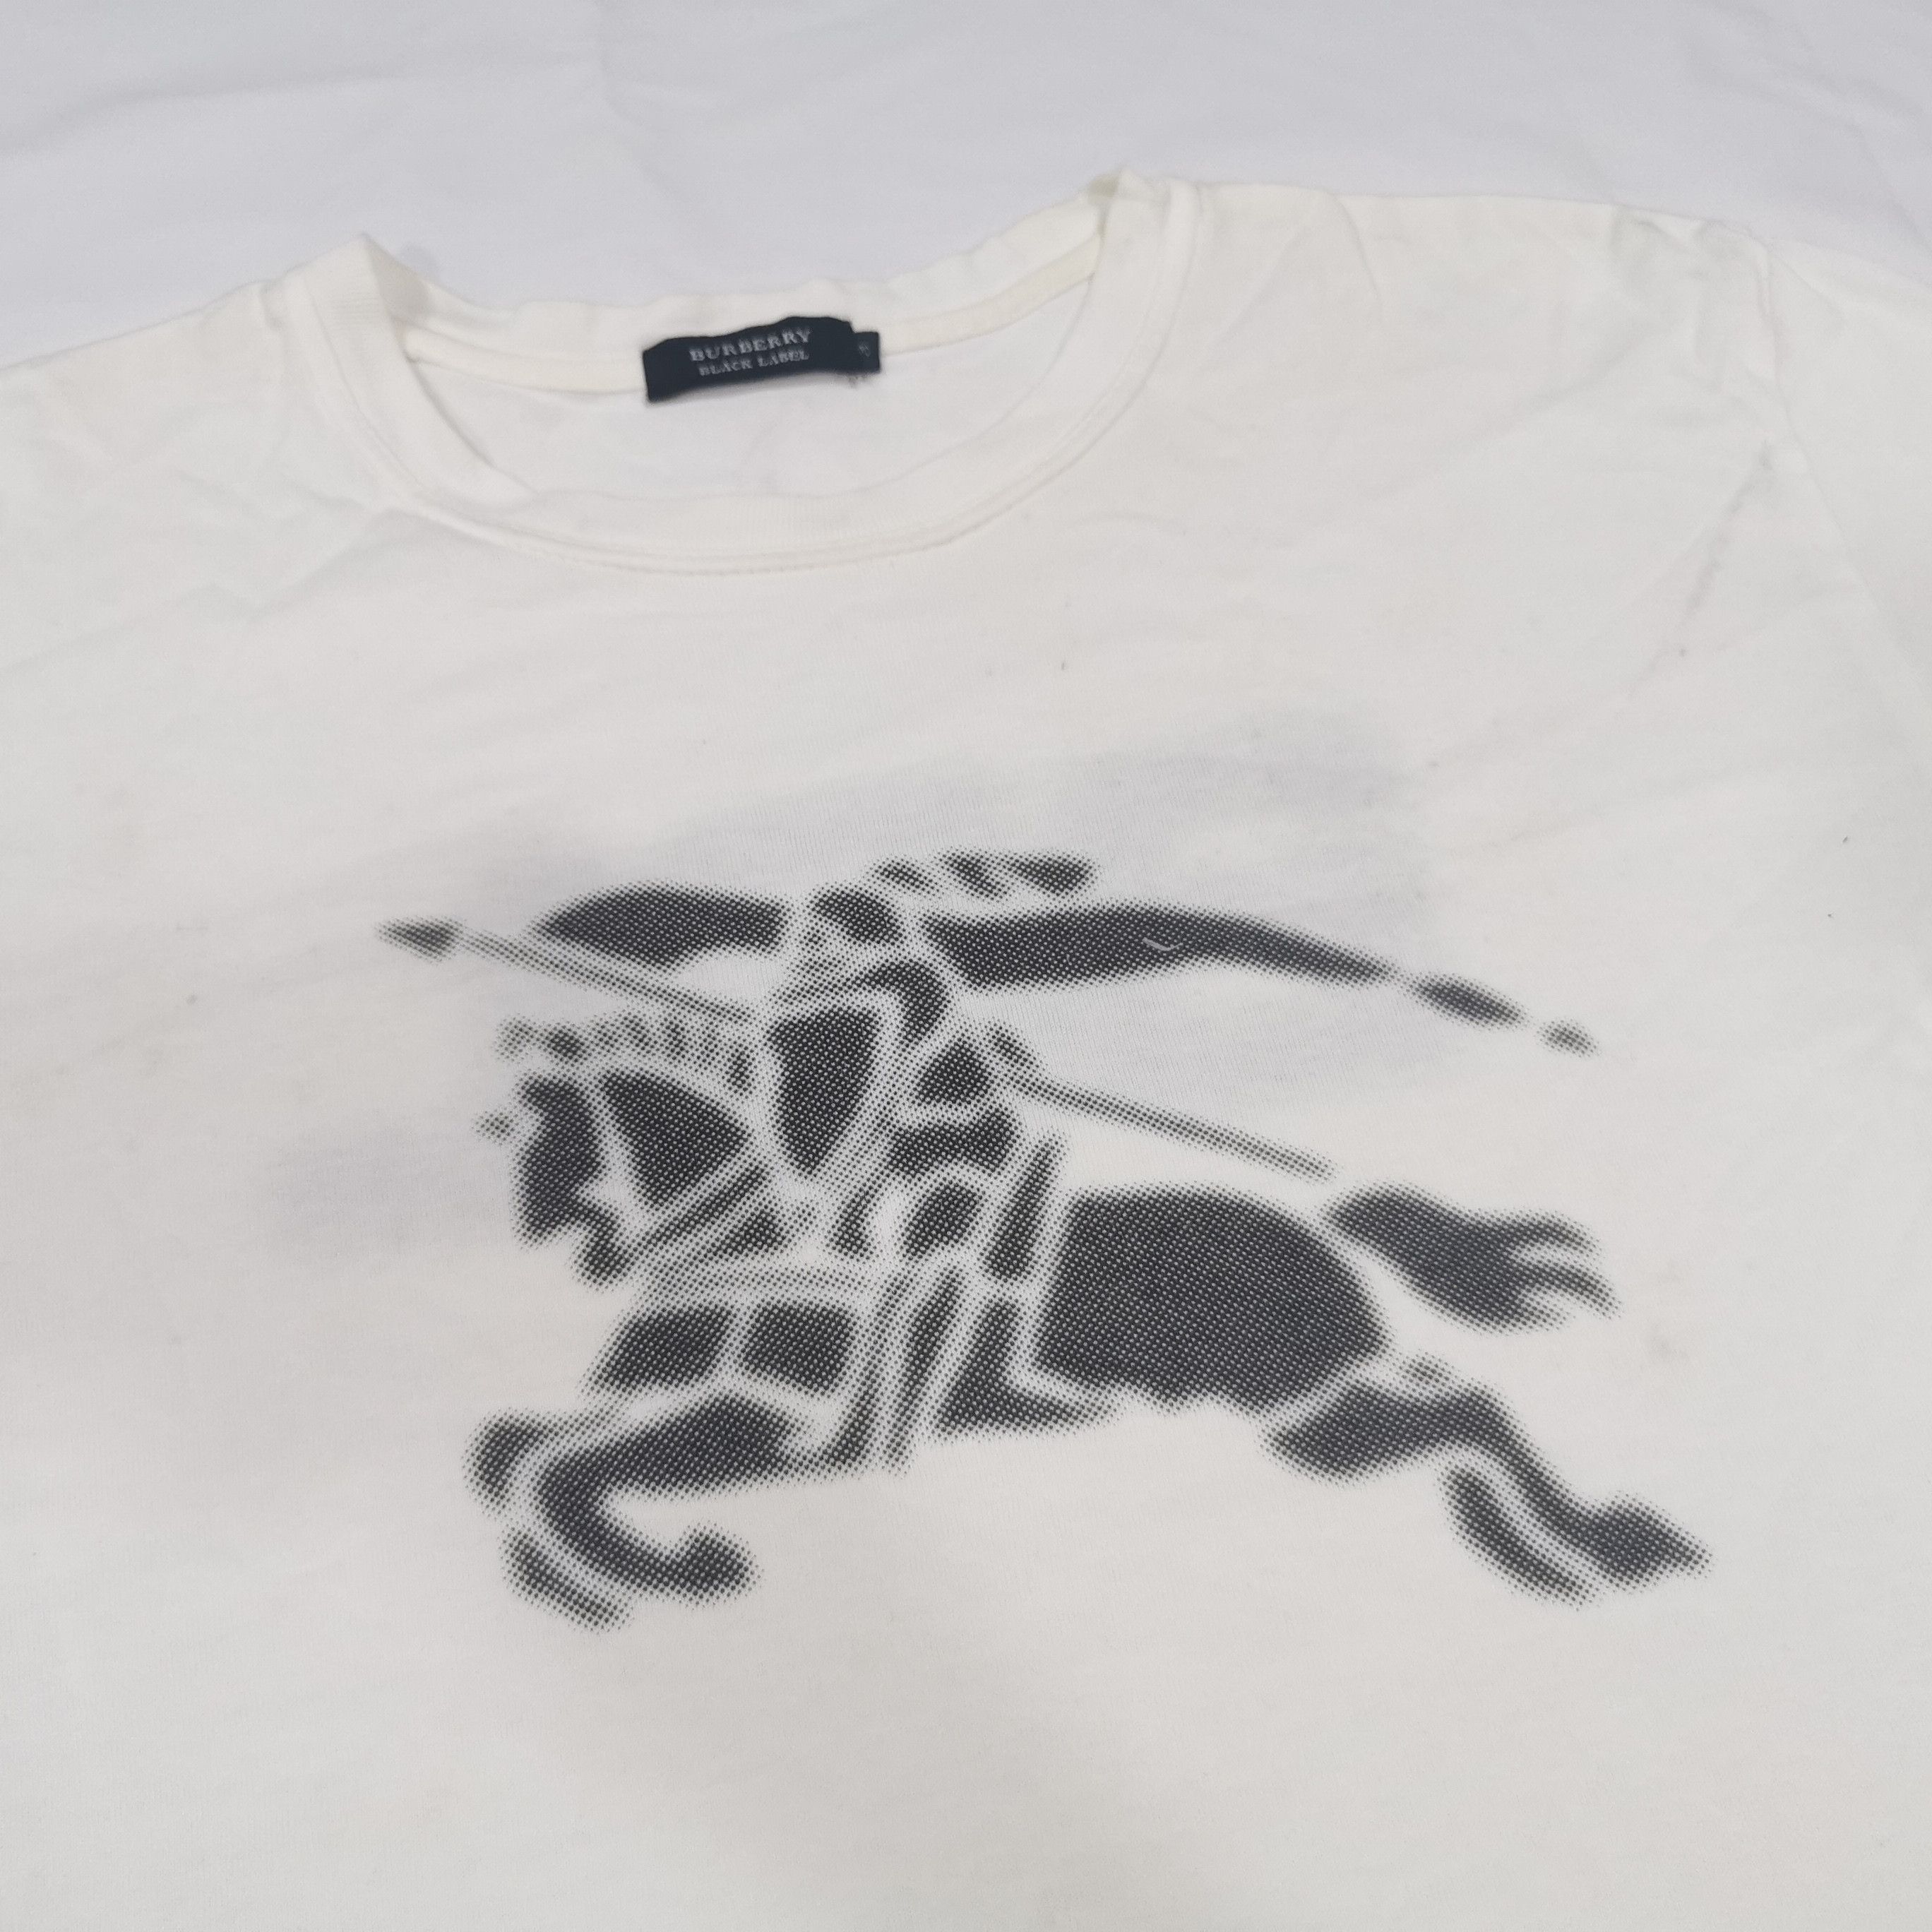 Vintage Burberry Black Label BBL Blur Logo Style Tshirt - 2